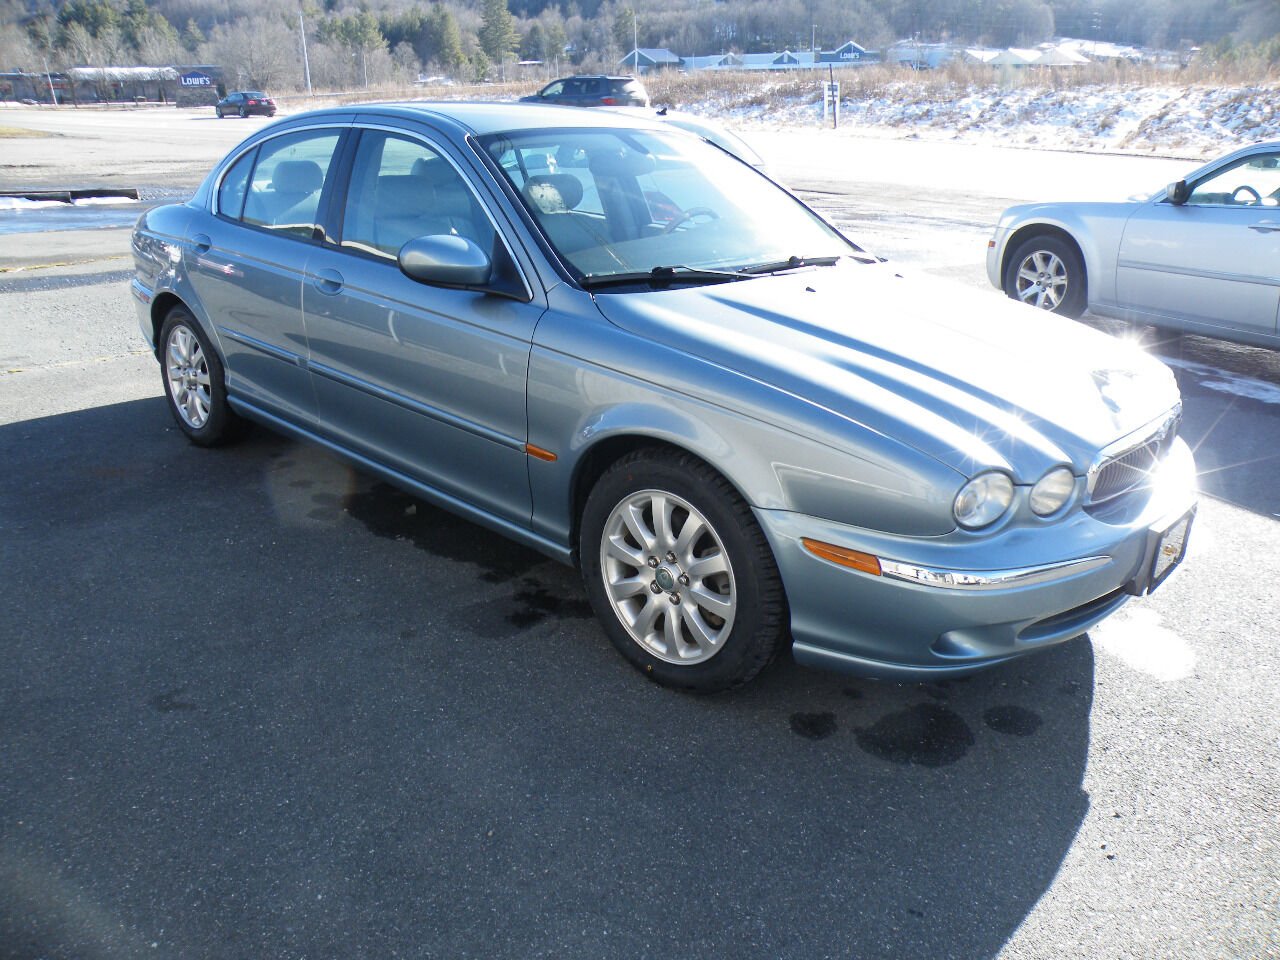 Jaguar X-Type For Sale In Carmel, IN - Carsforsale.com®